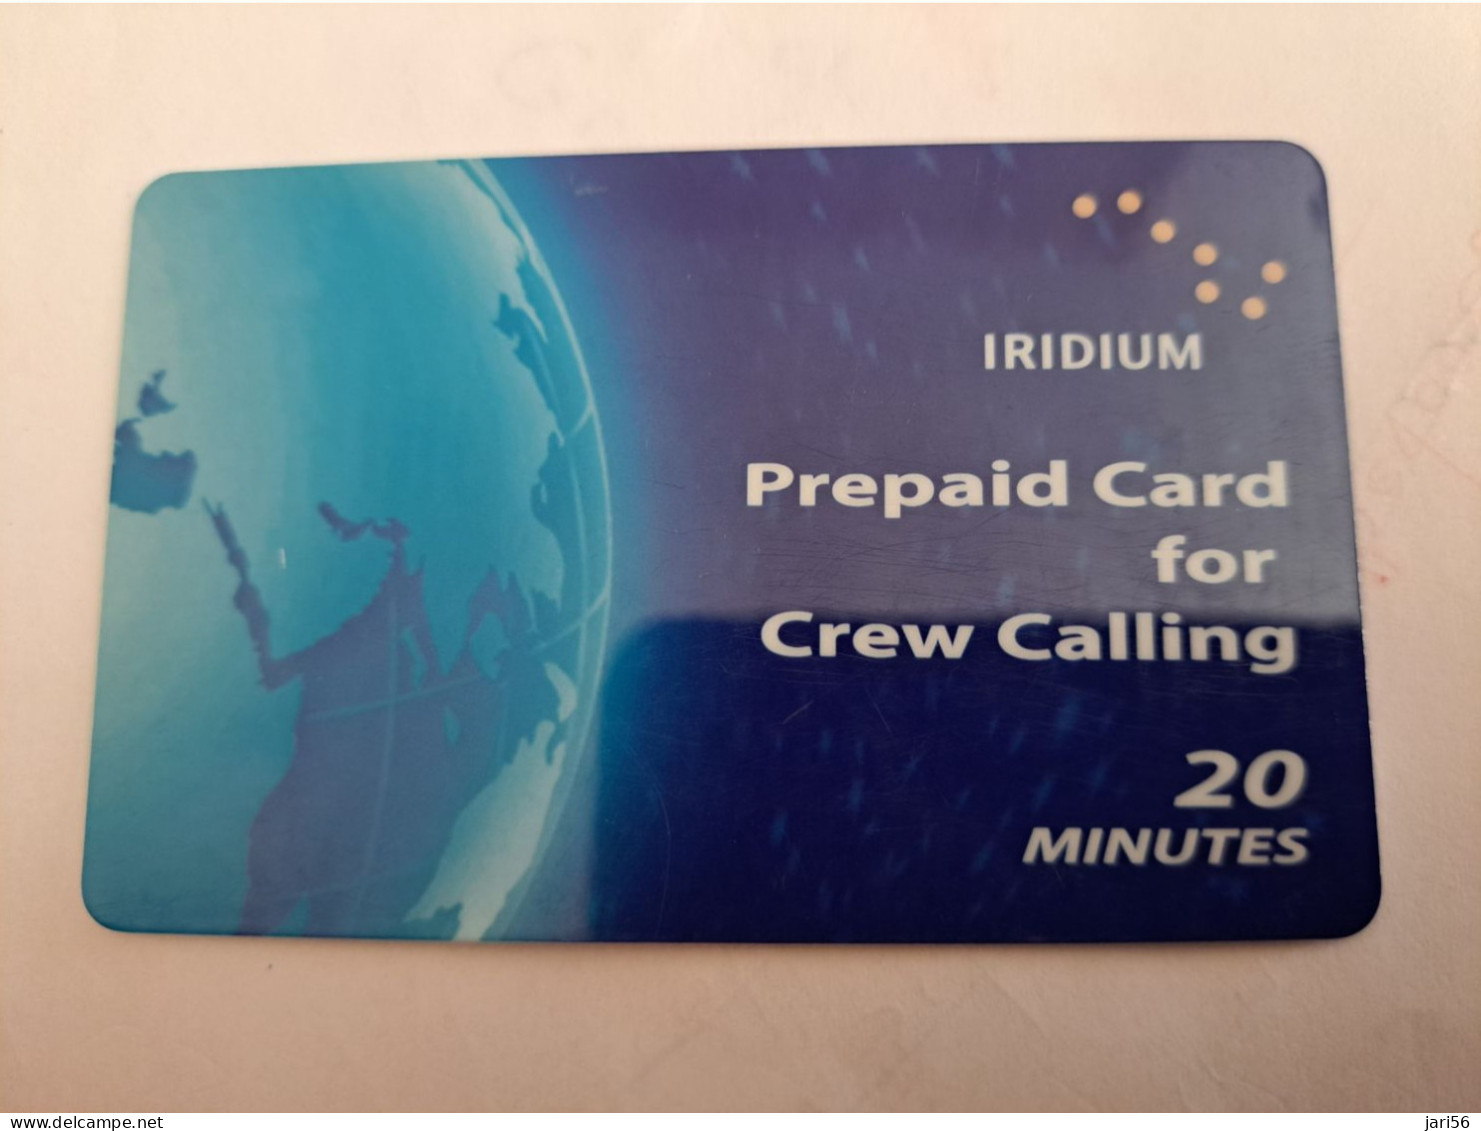 GREAT BRITAIN / IRIDIUM PREPAID/ CREW CALLING  /20 MINUTES   PREPAID CARD / USED       **14042** - Collections